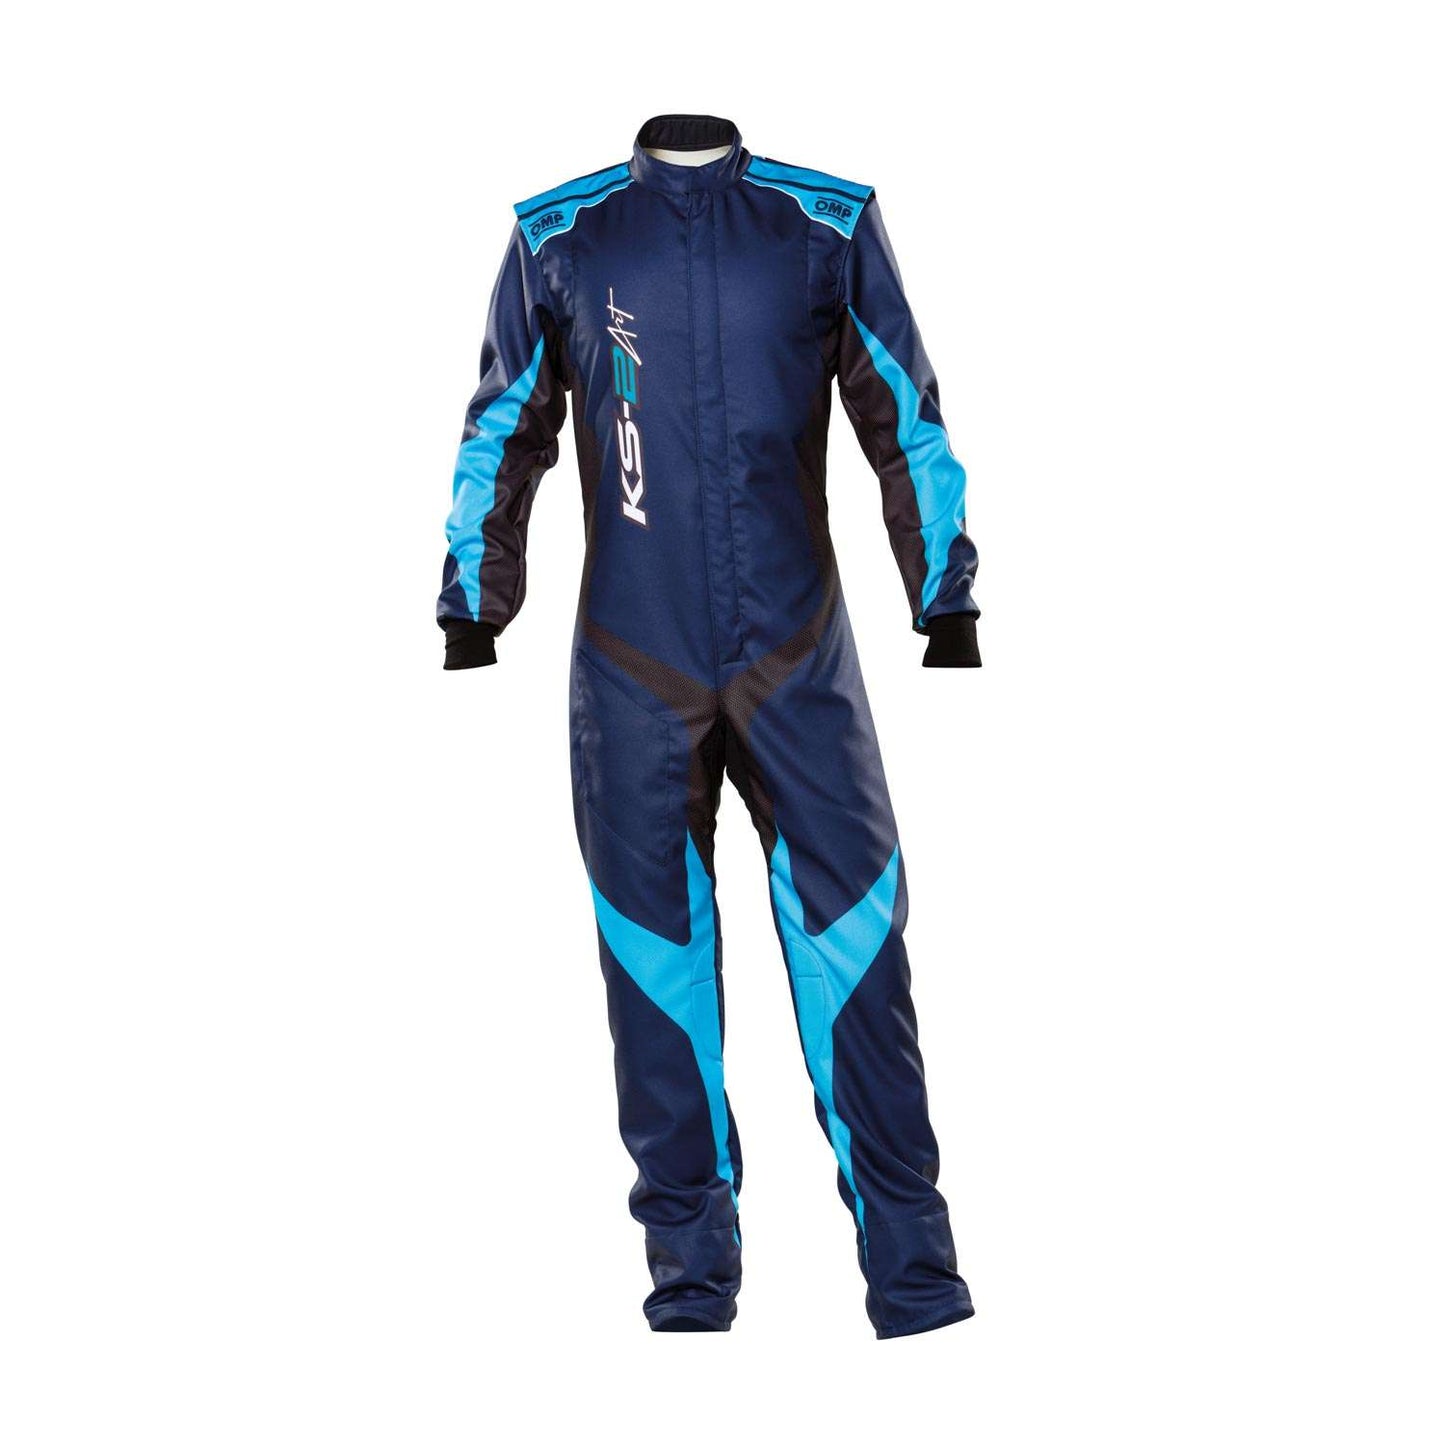 OMP KS-2 ART Karting Suit  (CIK-FIA homologation)